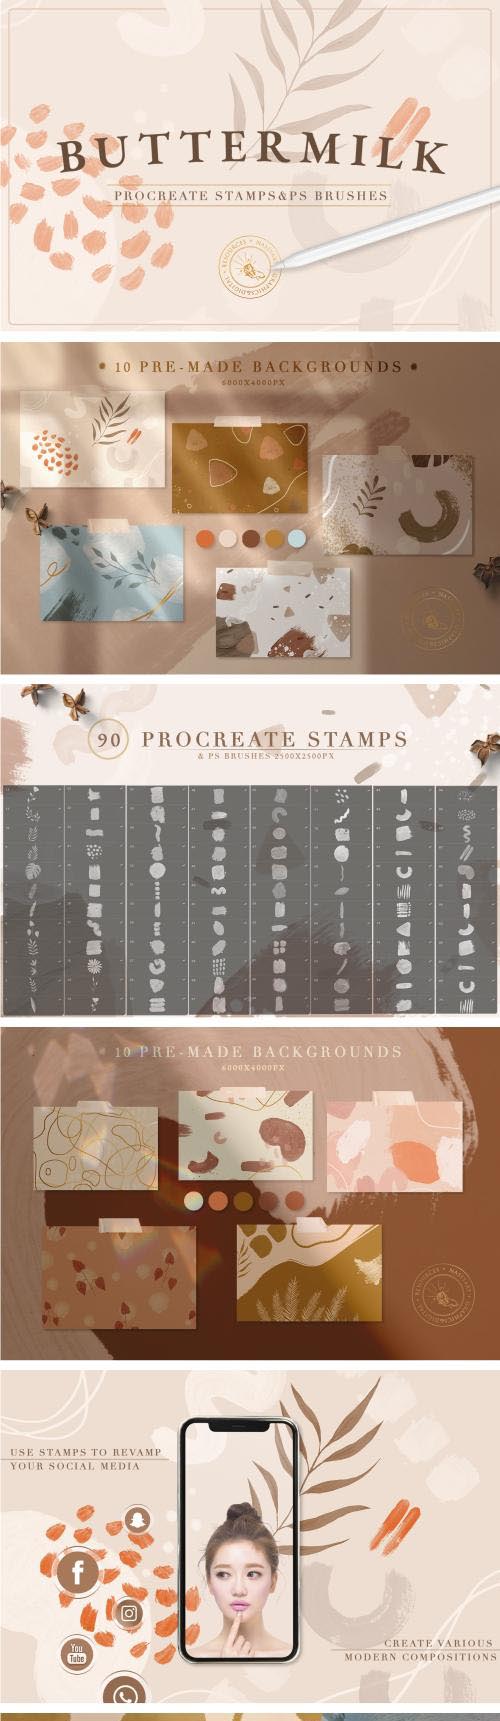 CM - 90 Procreate&PS Stamp Brushes - 4107487